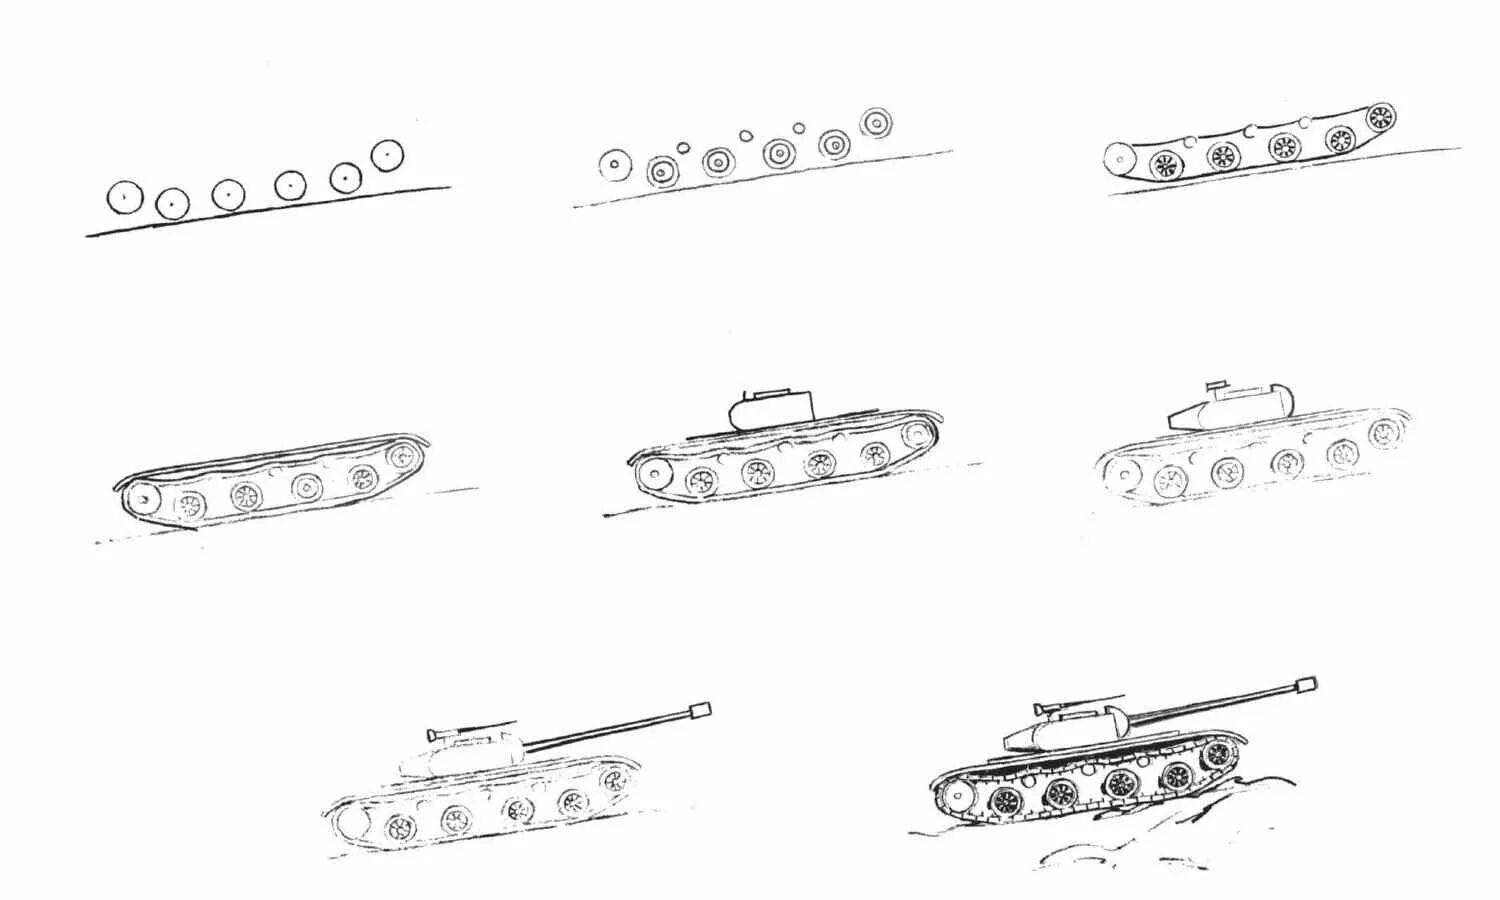 Рисунок на 9 поэтапно. Танк т34 рисунок поэтапный. Т34 танк рисунок пошагово. Поэтапное рисование танка т34. Танк т-34 рисунок поэтапно.